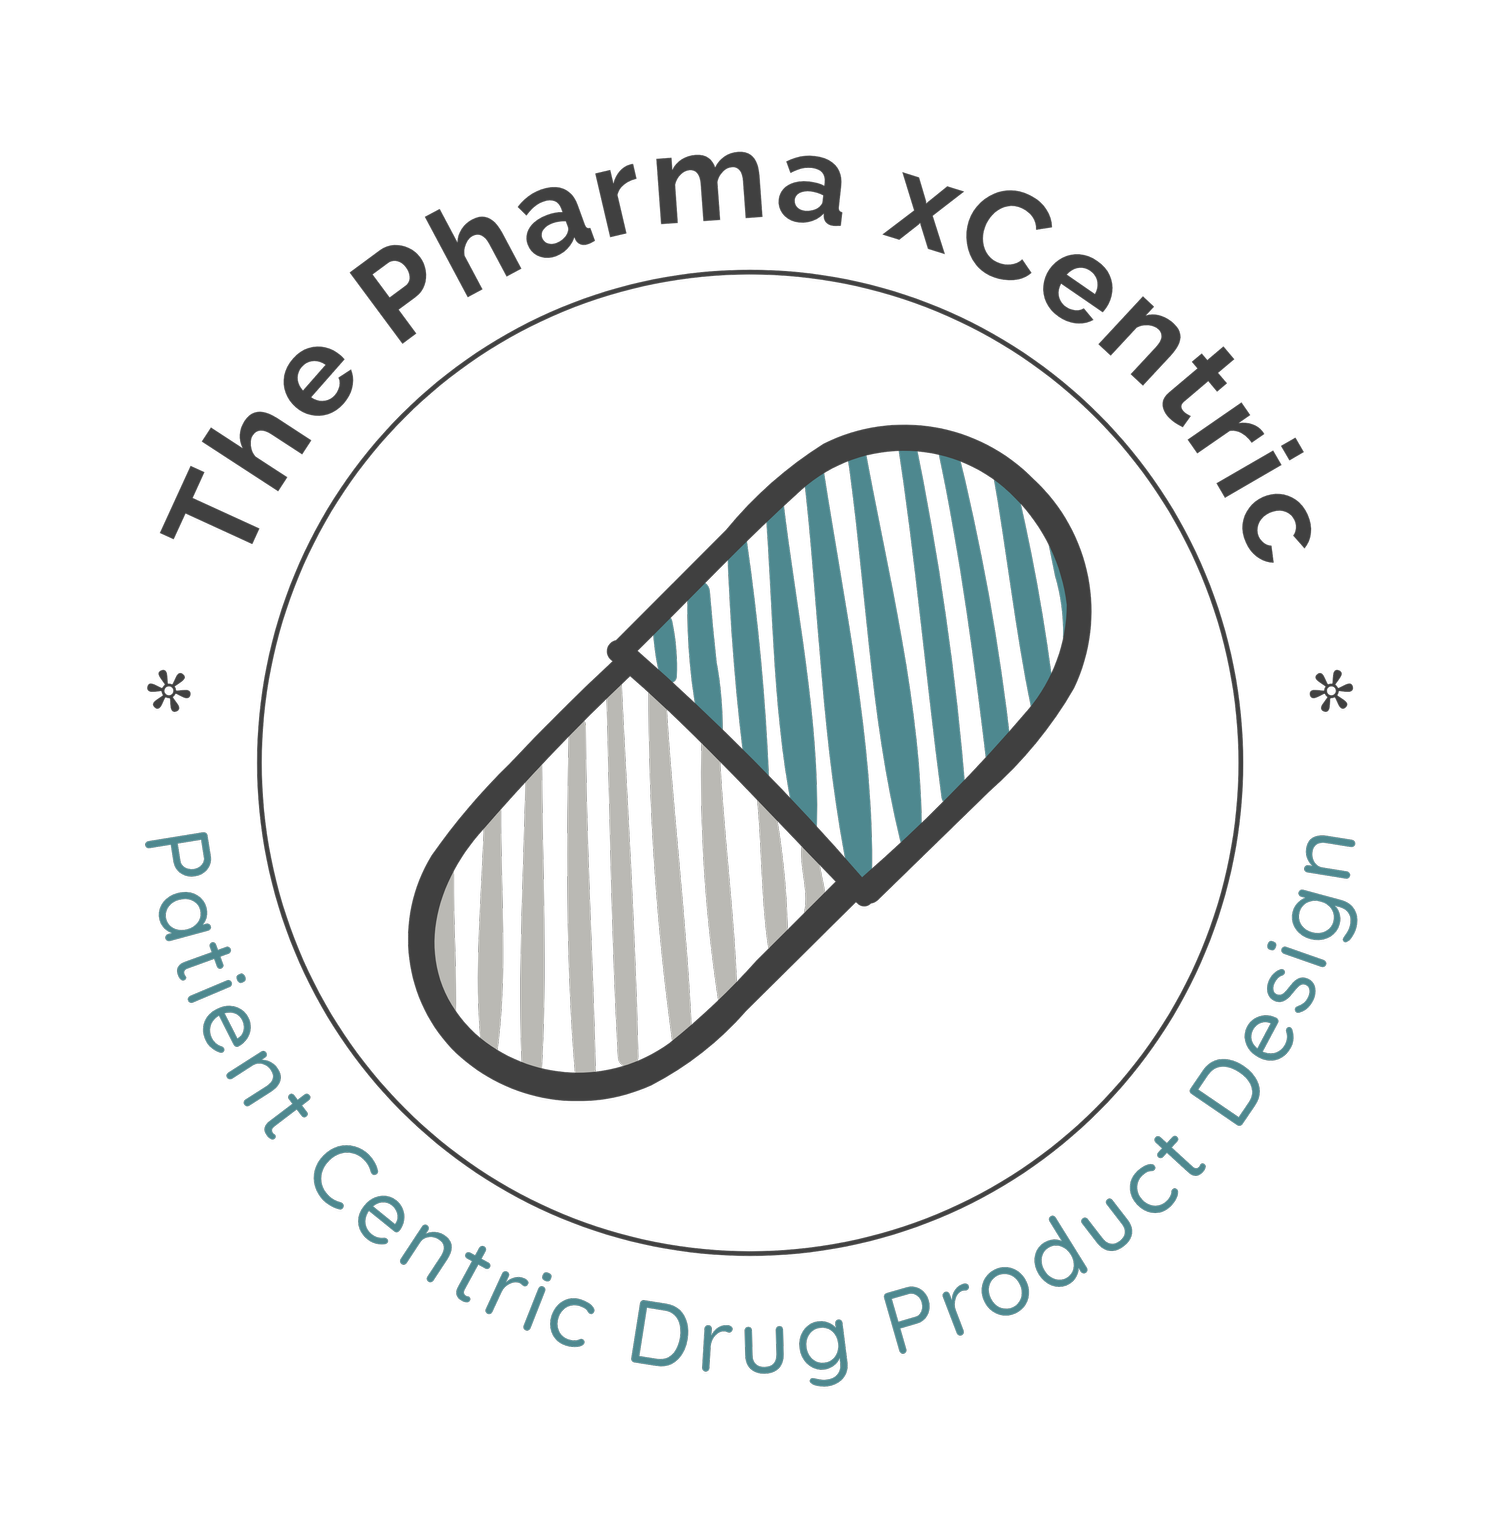 The Pharma xCentric